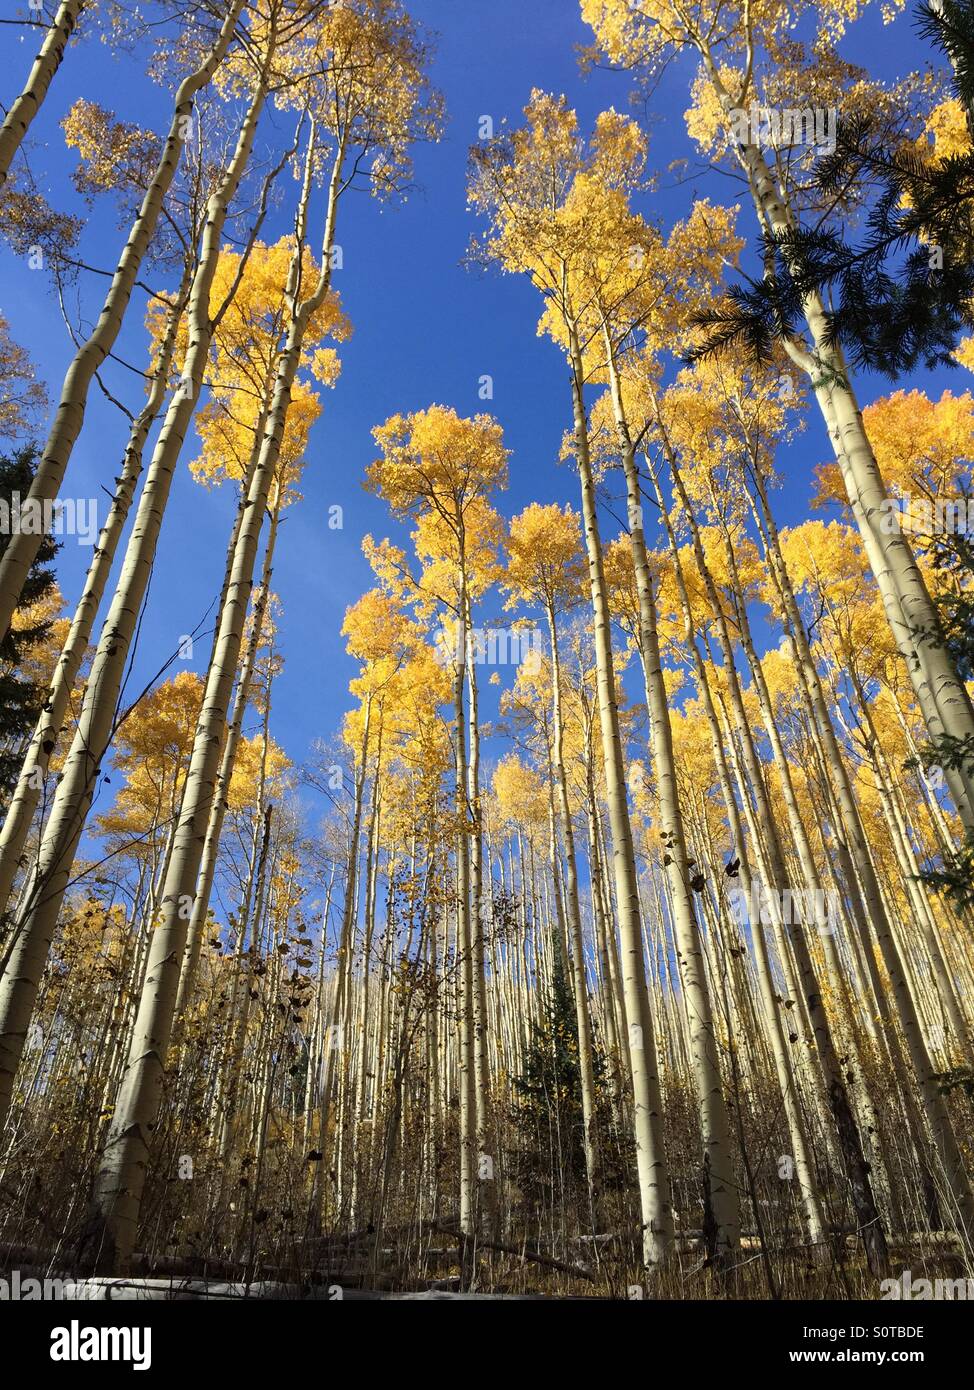 Aspen trees in full fall colors teach towards the sky in Santa Fe, NM. Stock Photo